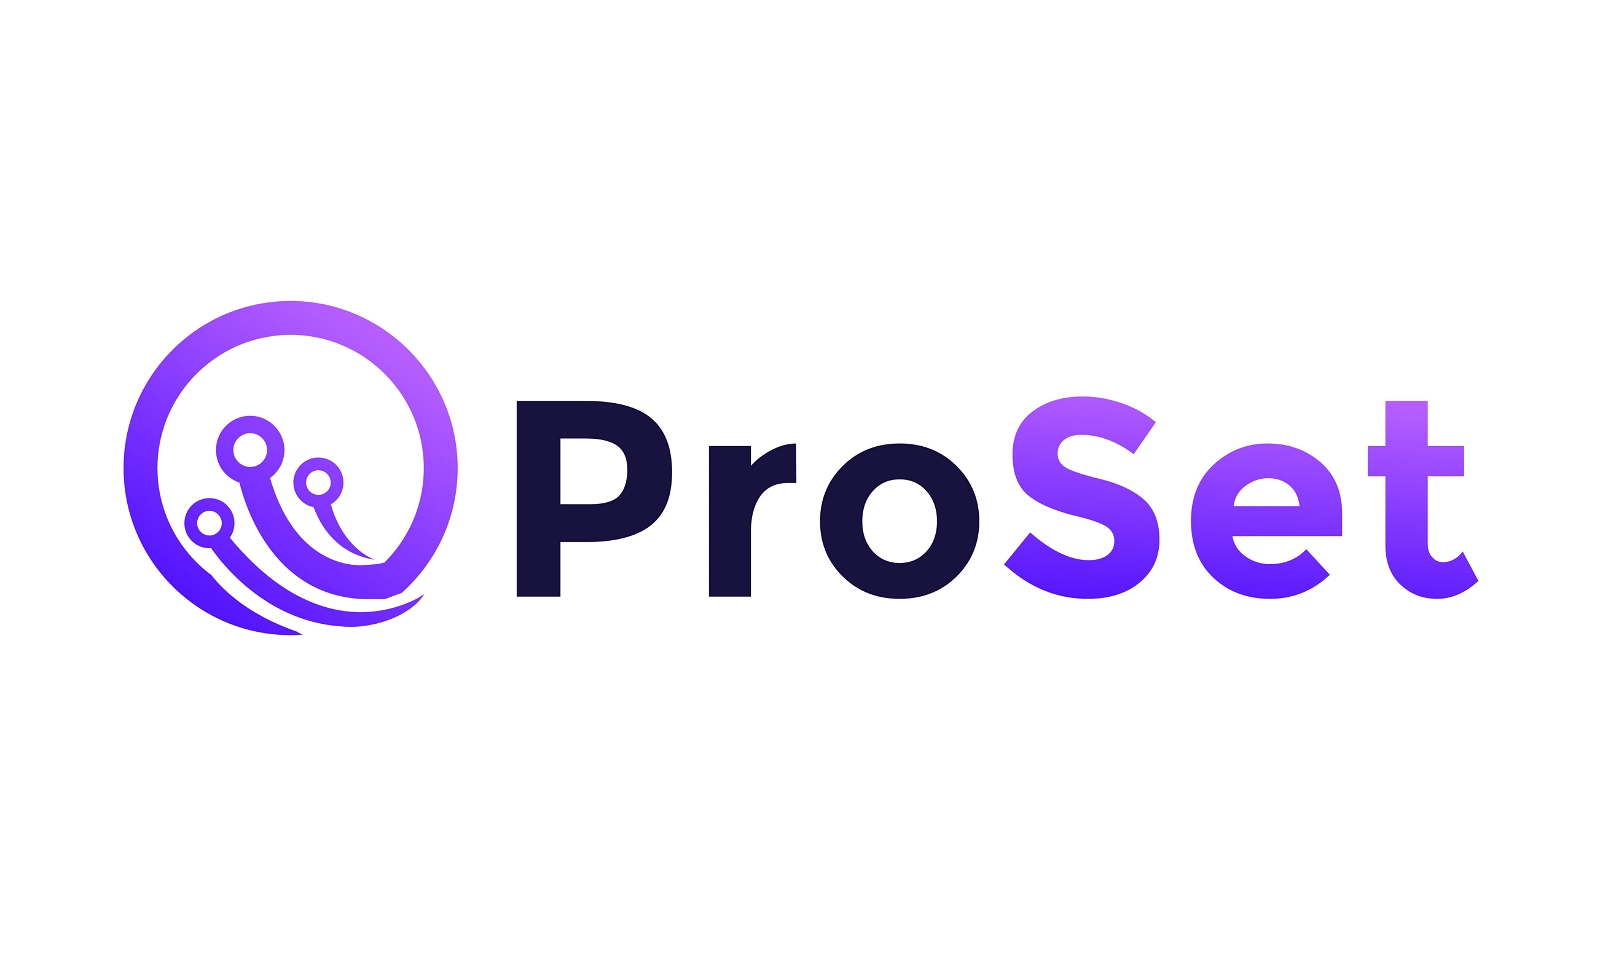 ProSet.com - Creative brandable domain for sale